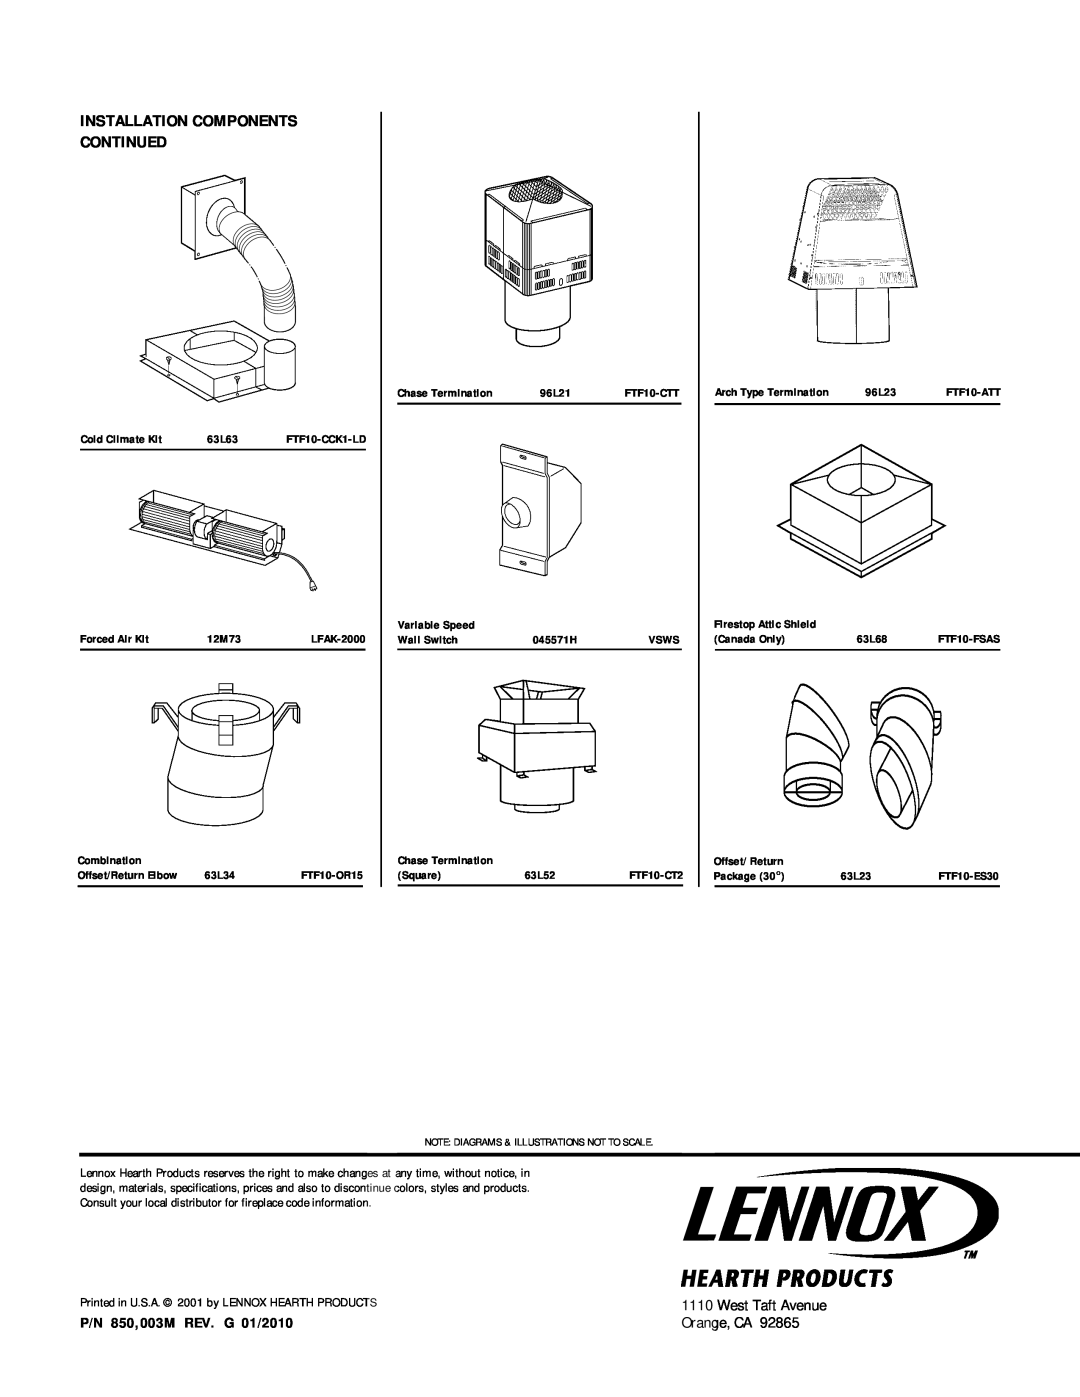 Lennox Hearth LBR-4324-H, LBC-4324-H Installation Components Continued, P/N 850,003M REV. G 01/2010, Orange, CA 